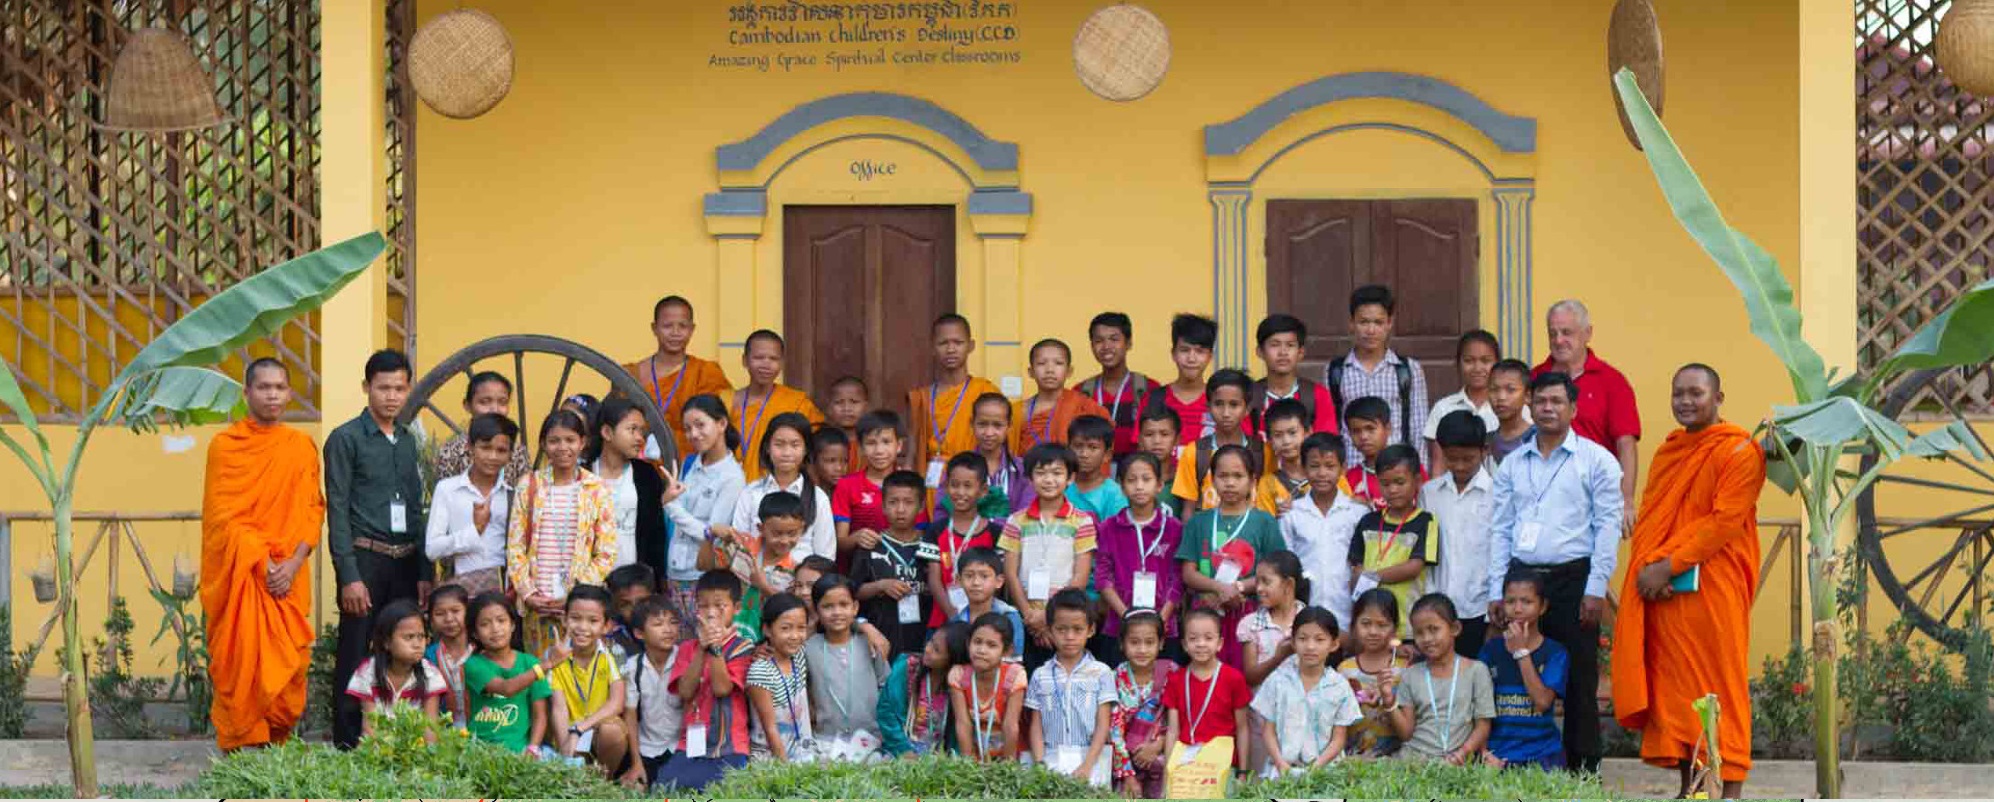 Cambodian Children's Destiny